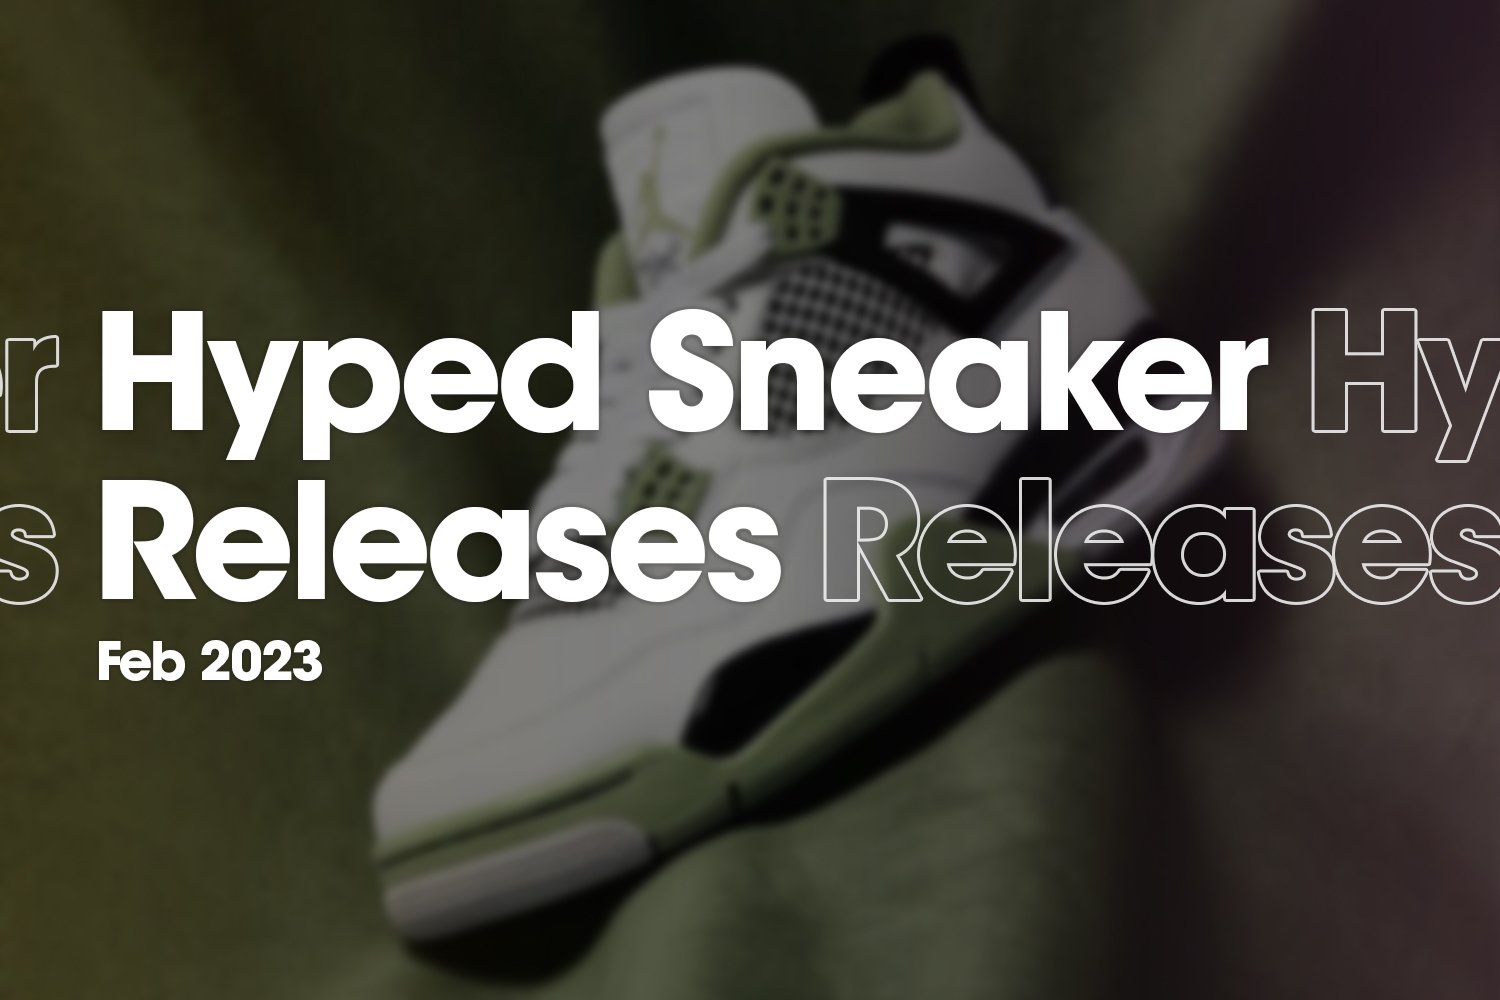 Hyped Sneaker Releases van februari 2022